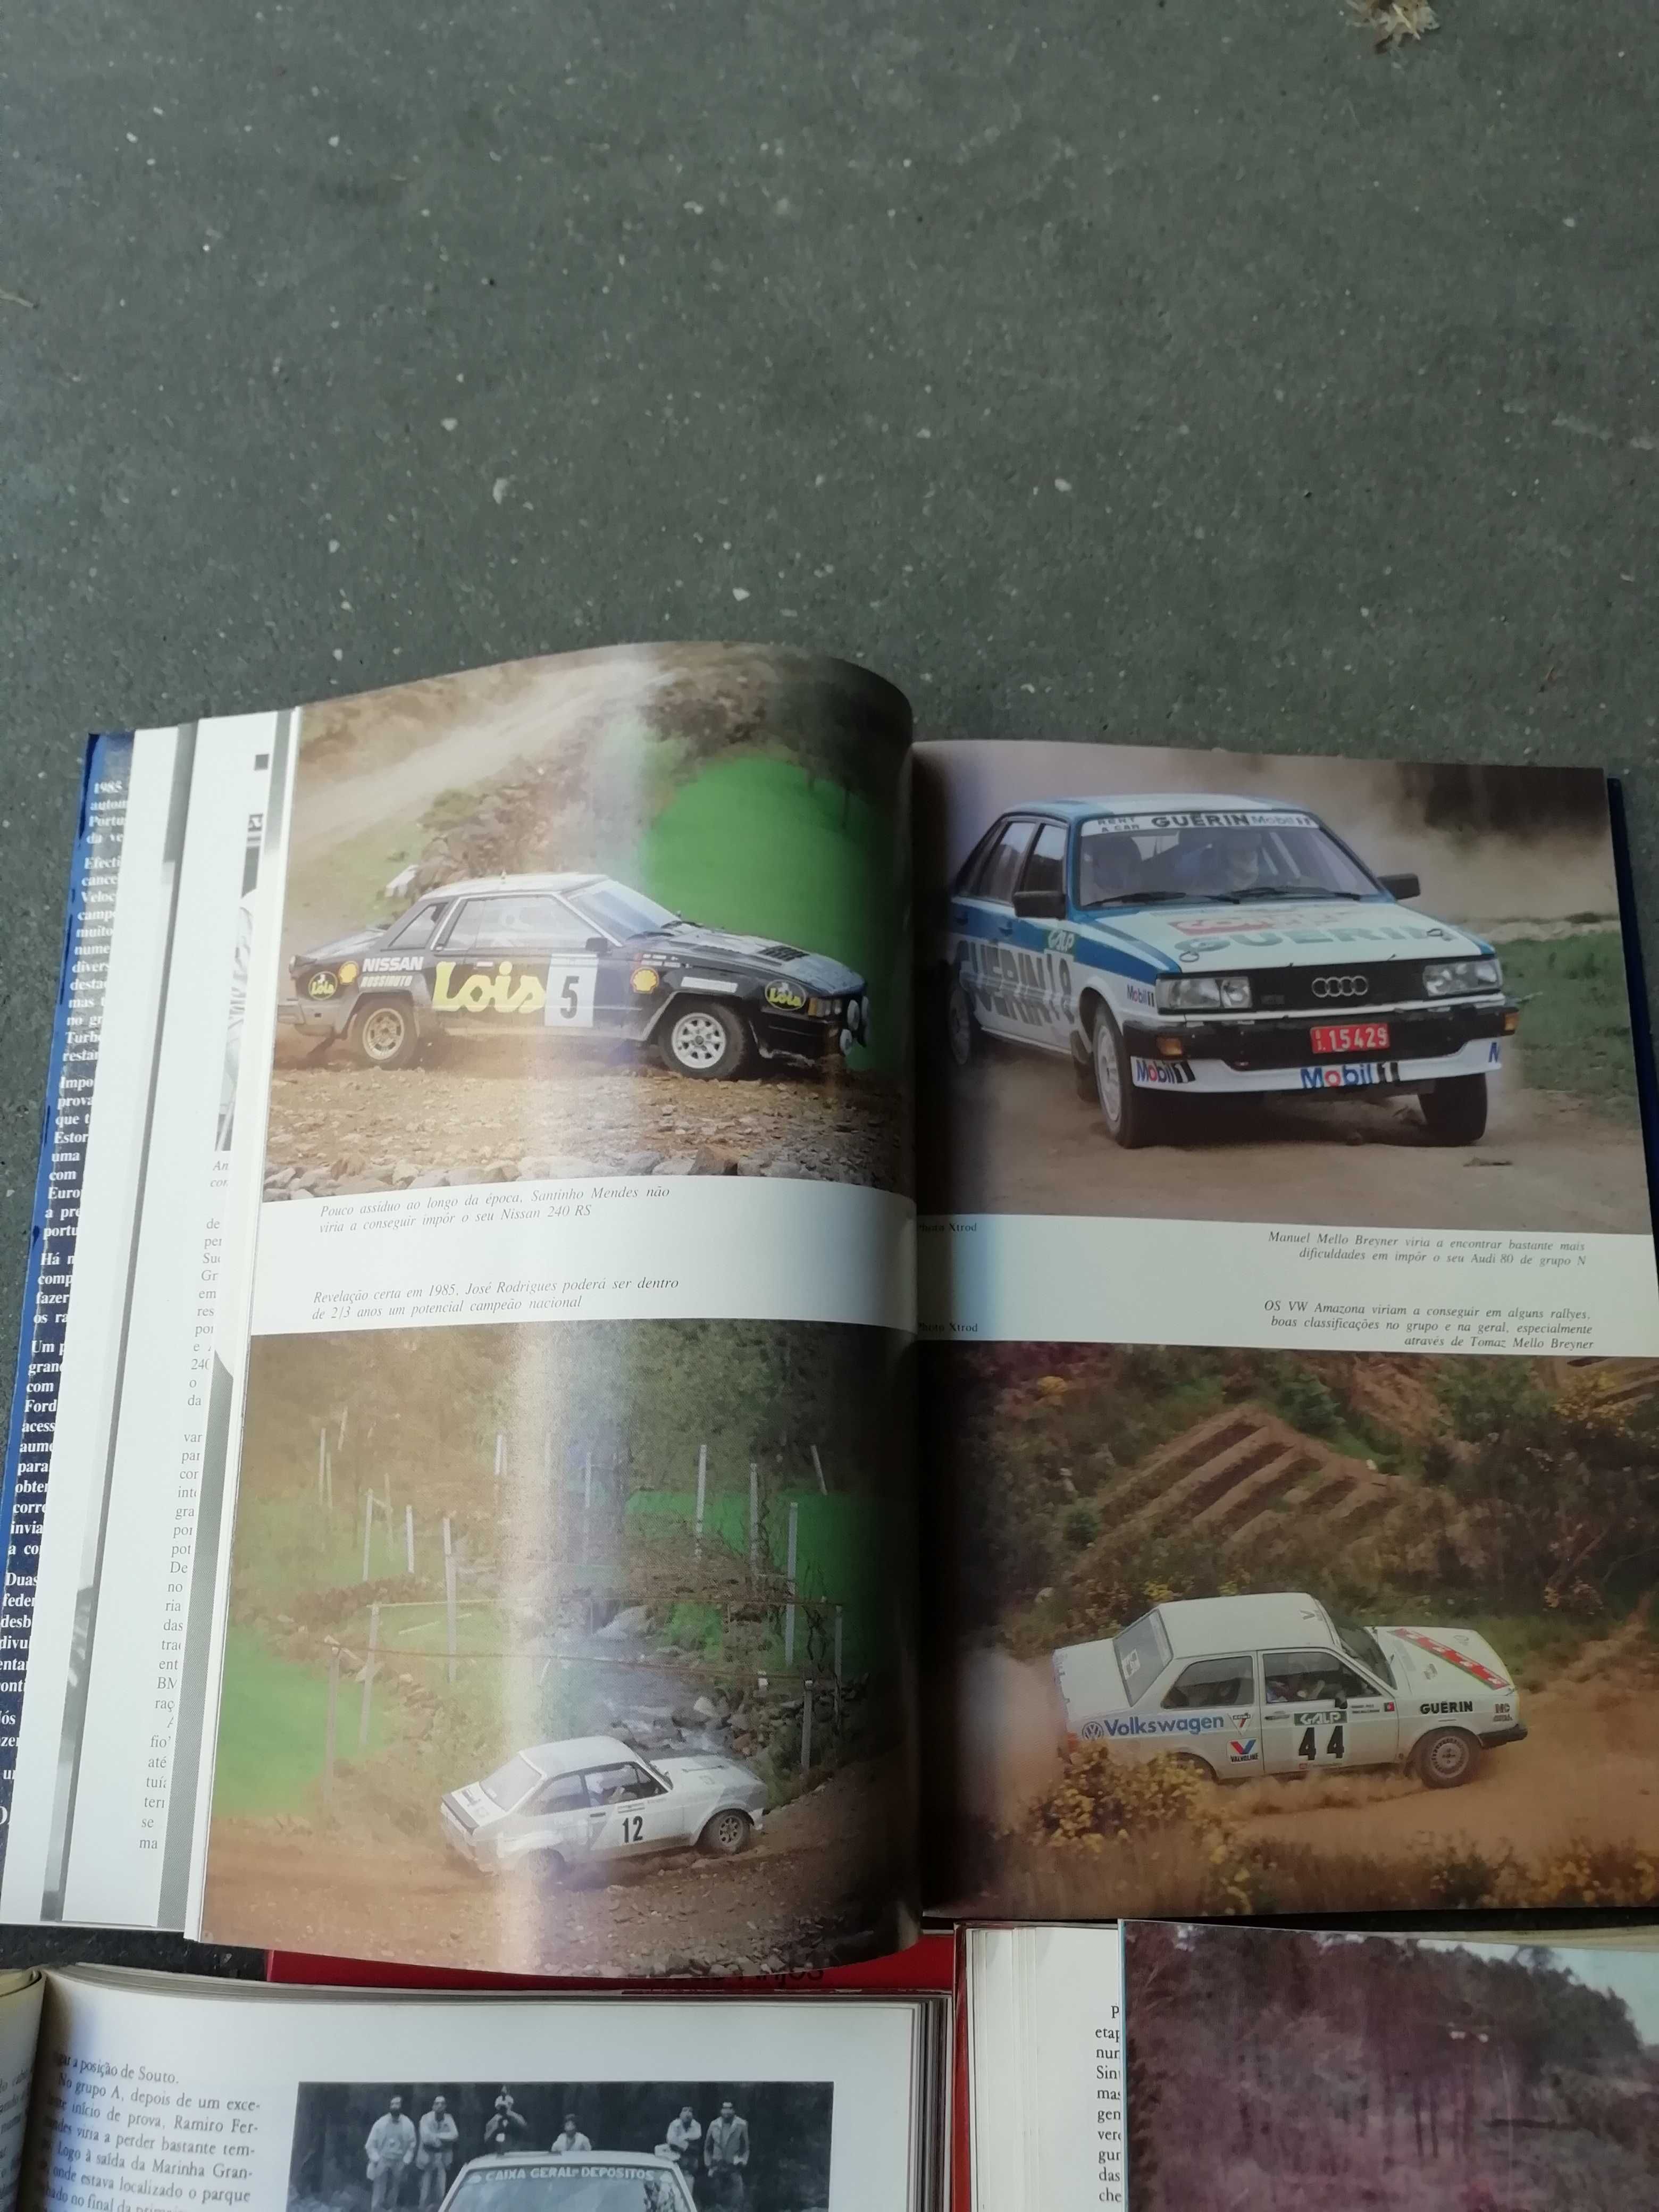 Livros rallyes e velocidade anos 80